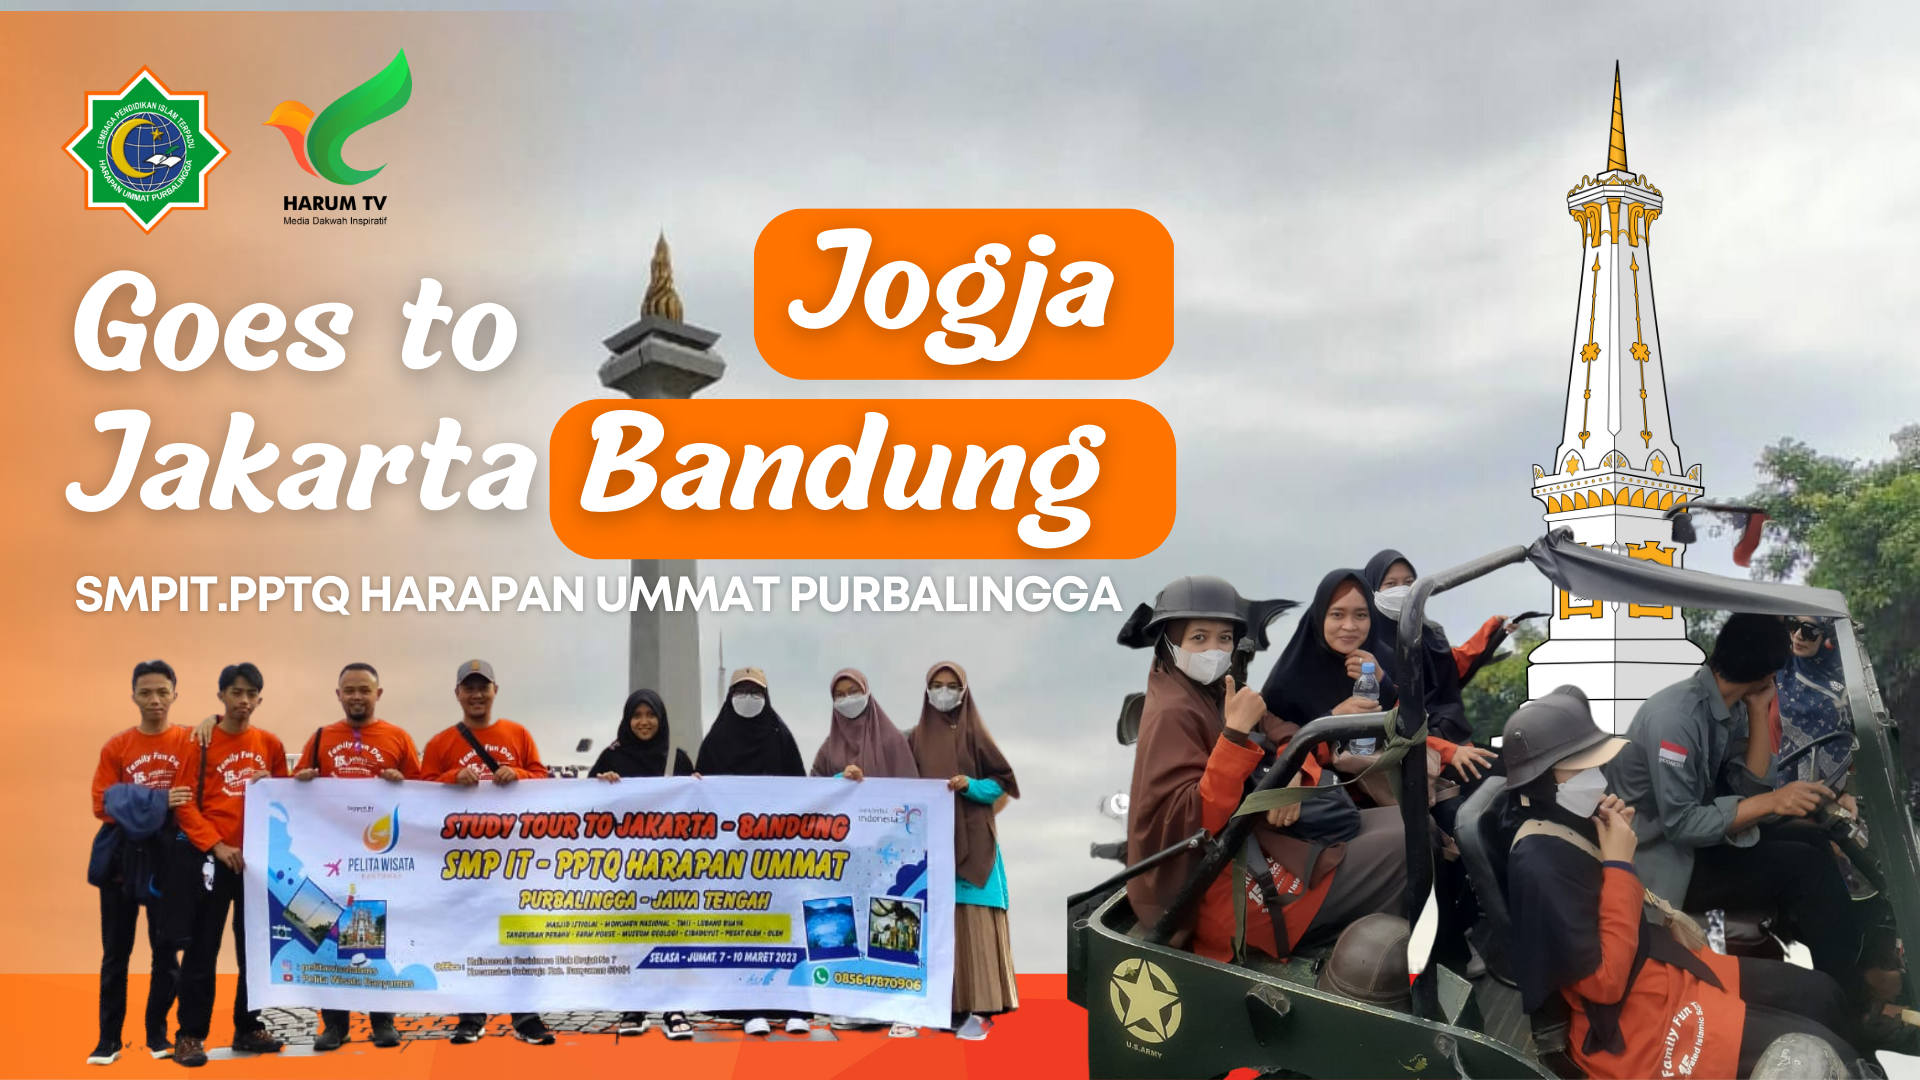 Rihlah SMP IT Harapan Ummat Purbalingga “Goes to Jogja & Jakarta Bandung”